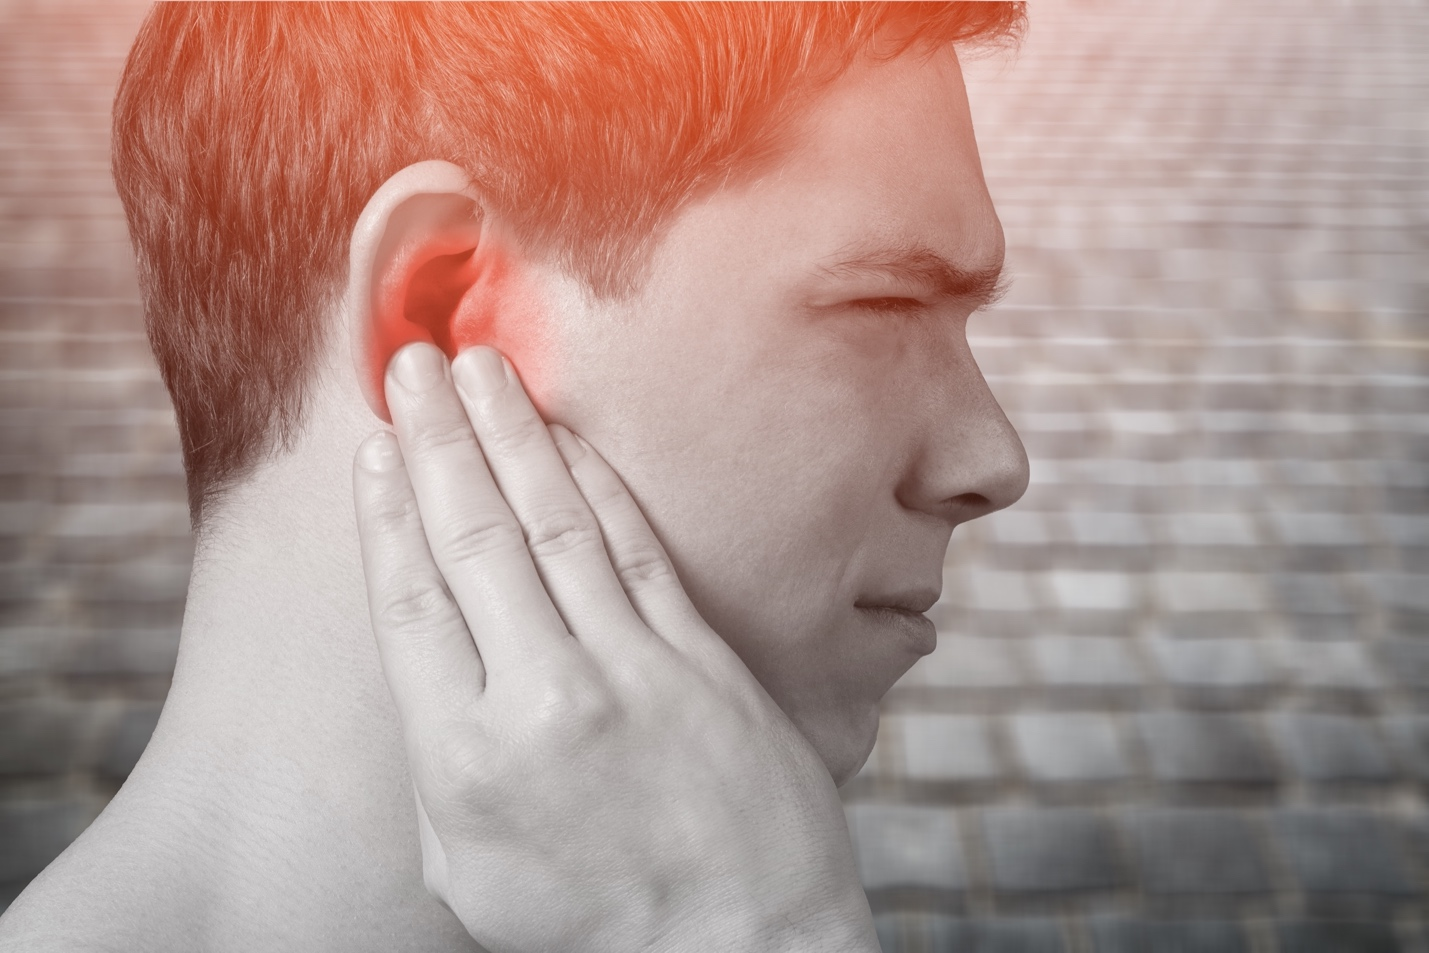 A man suffering from ear ache.